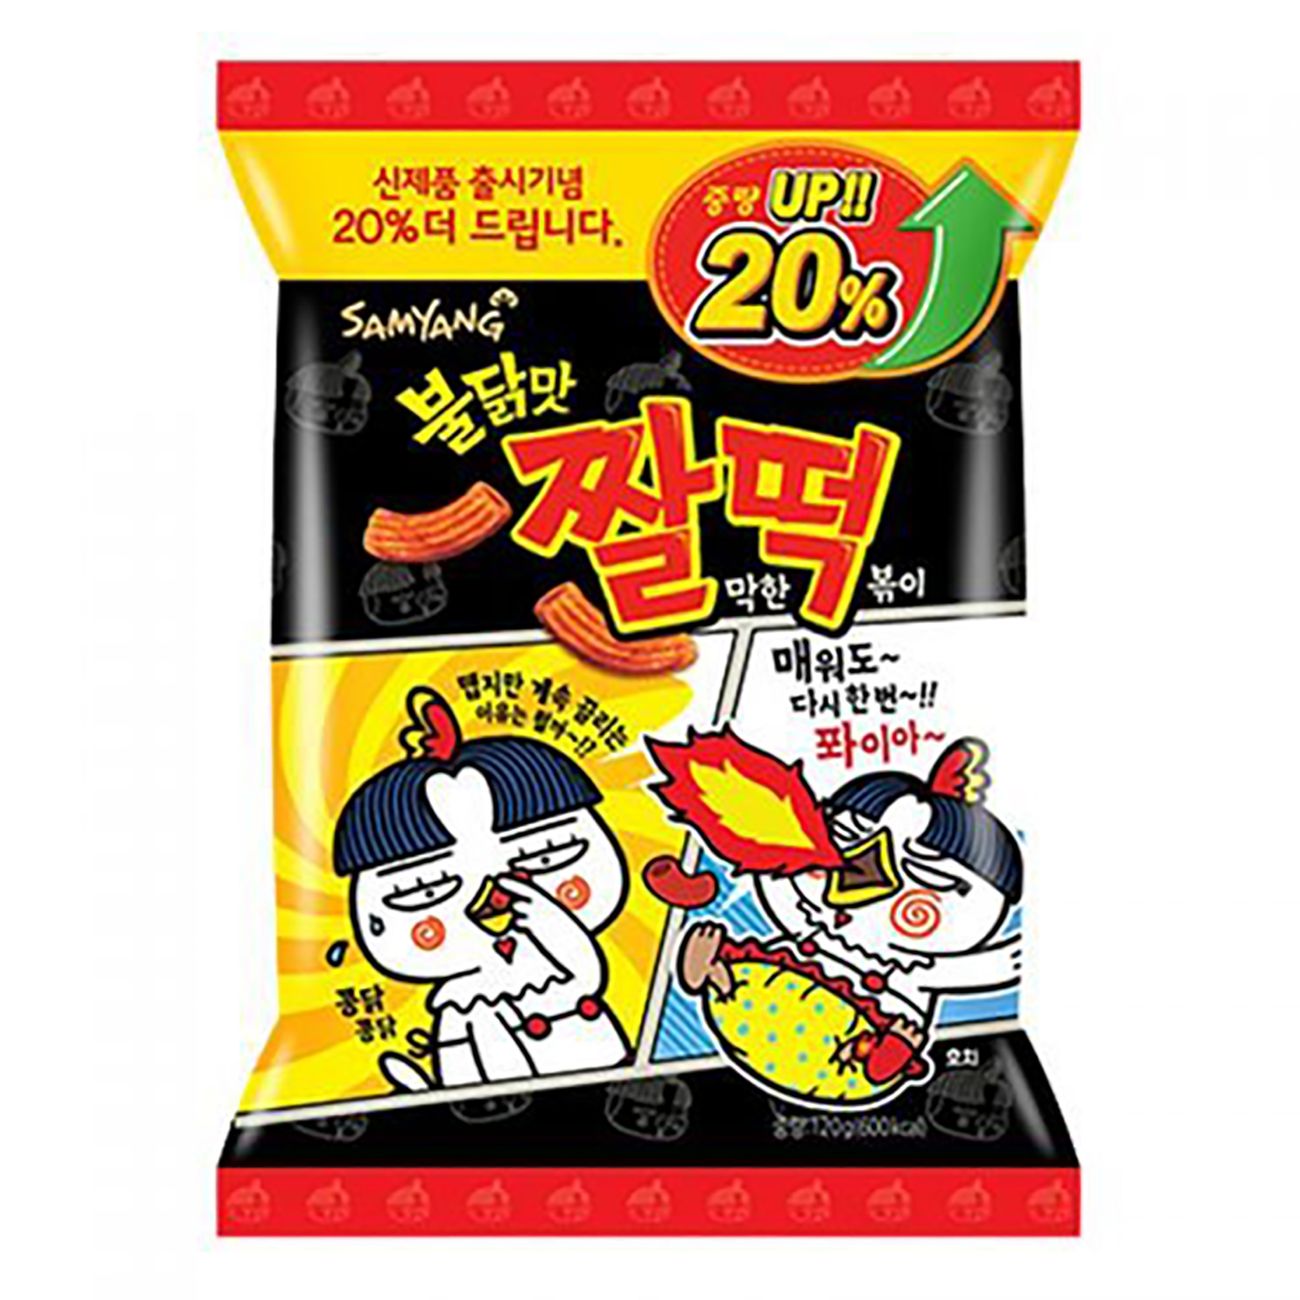 samyang-zzaldukk-hot-chicken-snack-89881-1